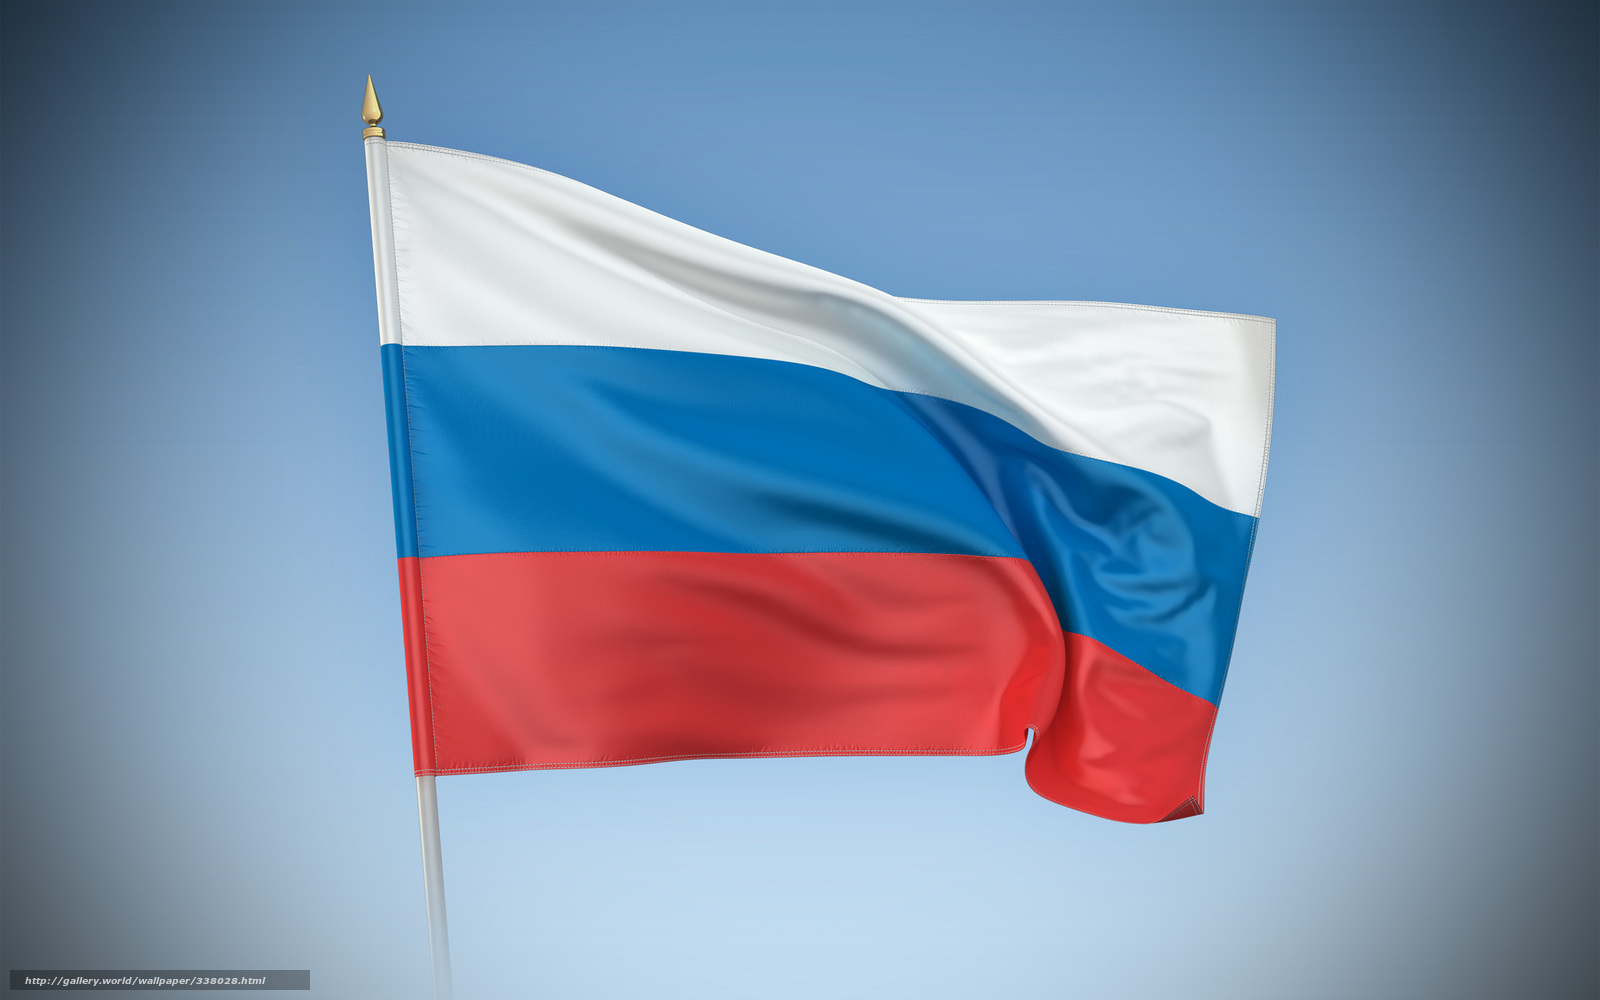 338028_rossiya_flag_trikolor_belyj_sinij_krasnyj_2560x1600_www.Gde-Fon.com.jpg